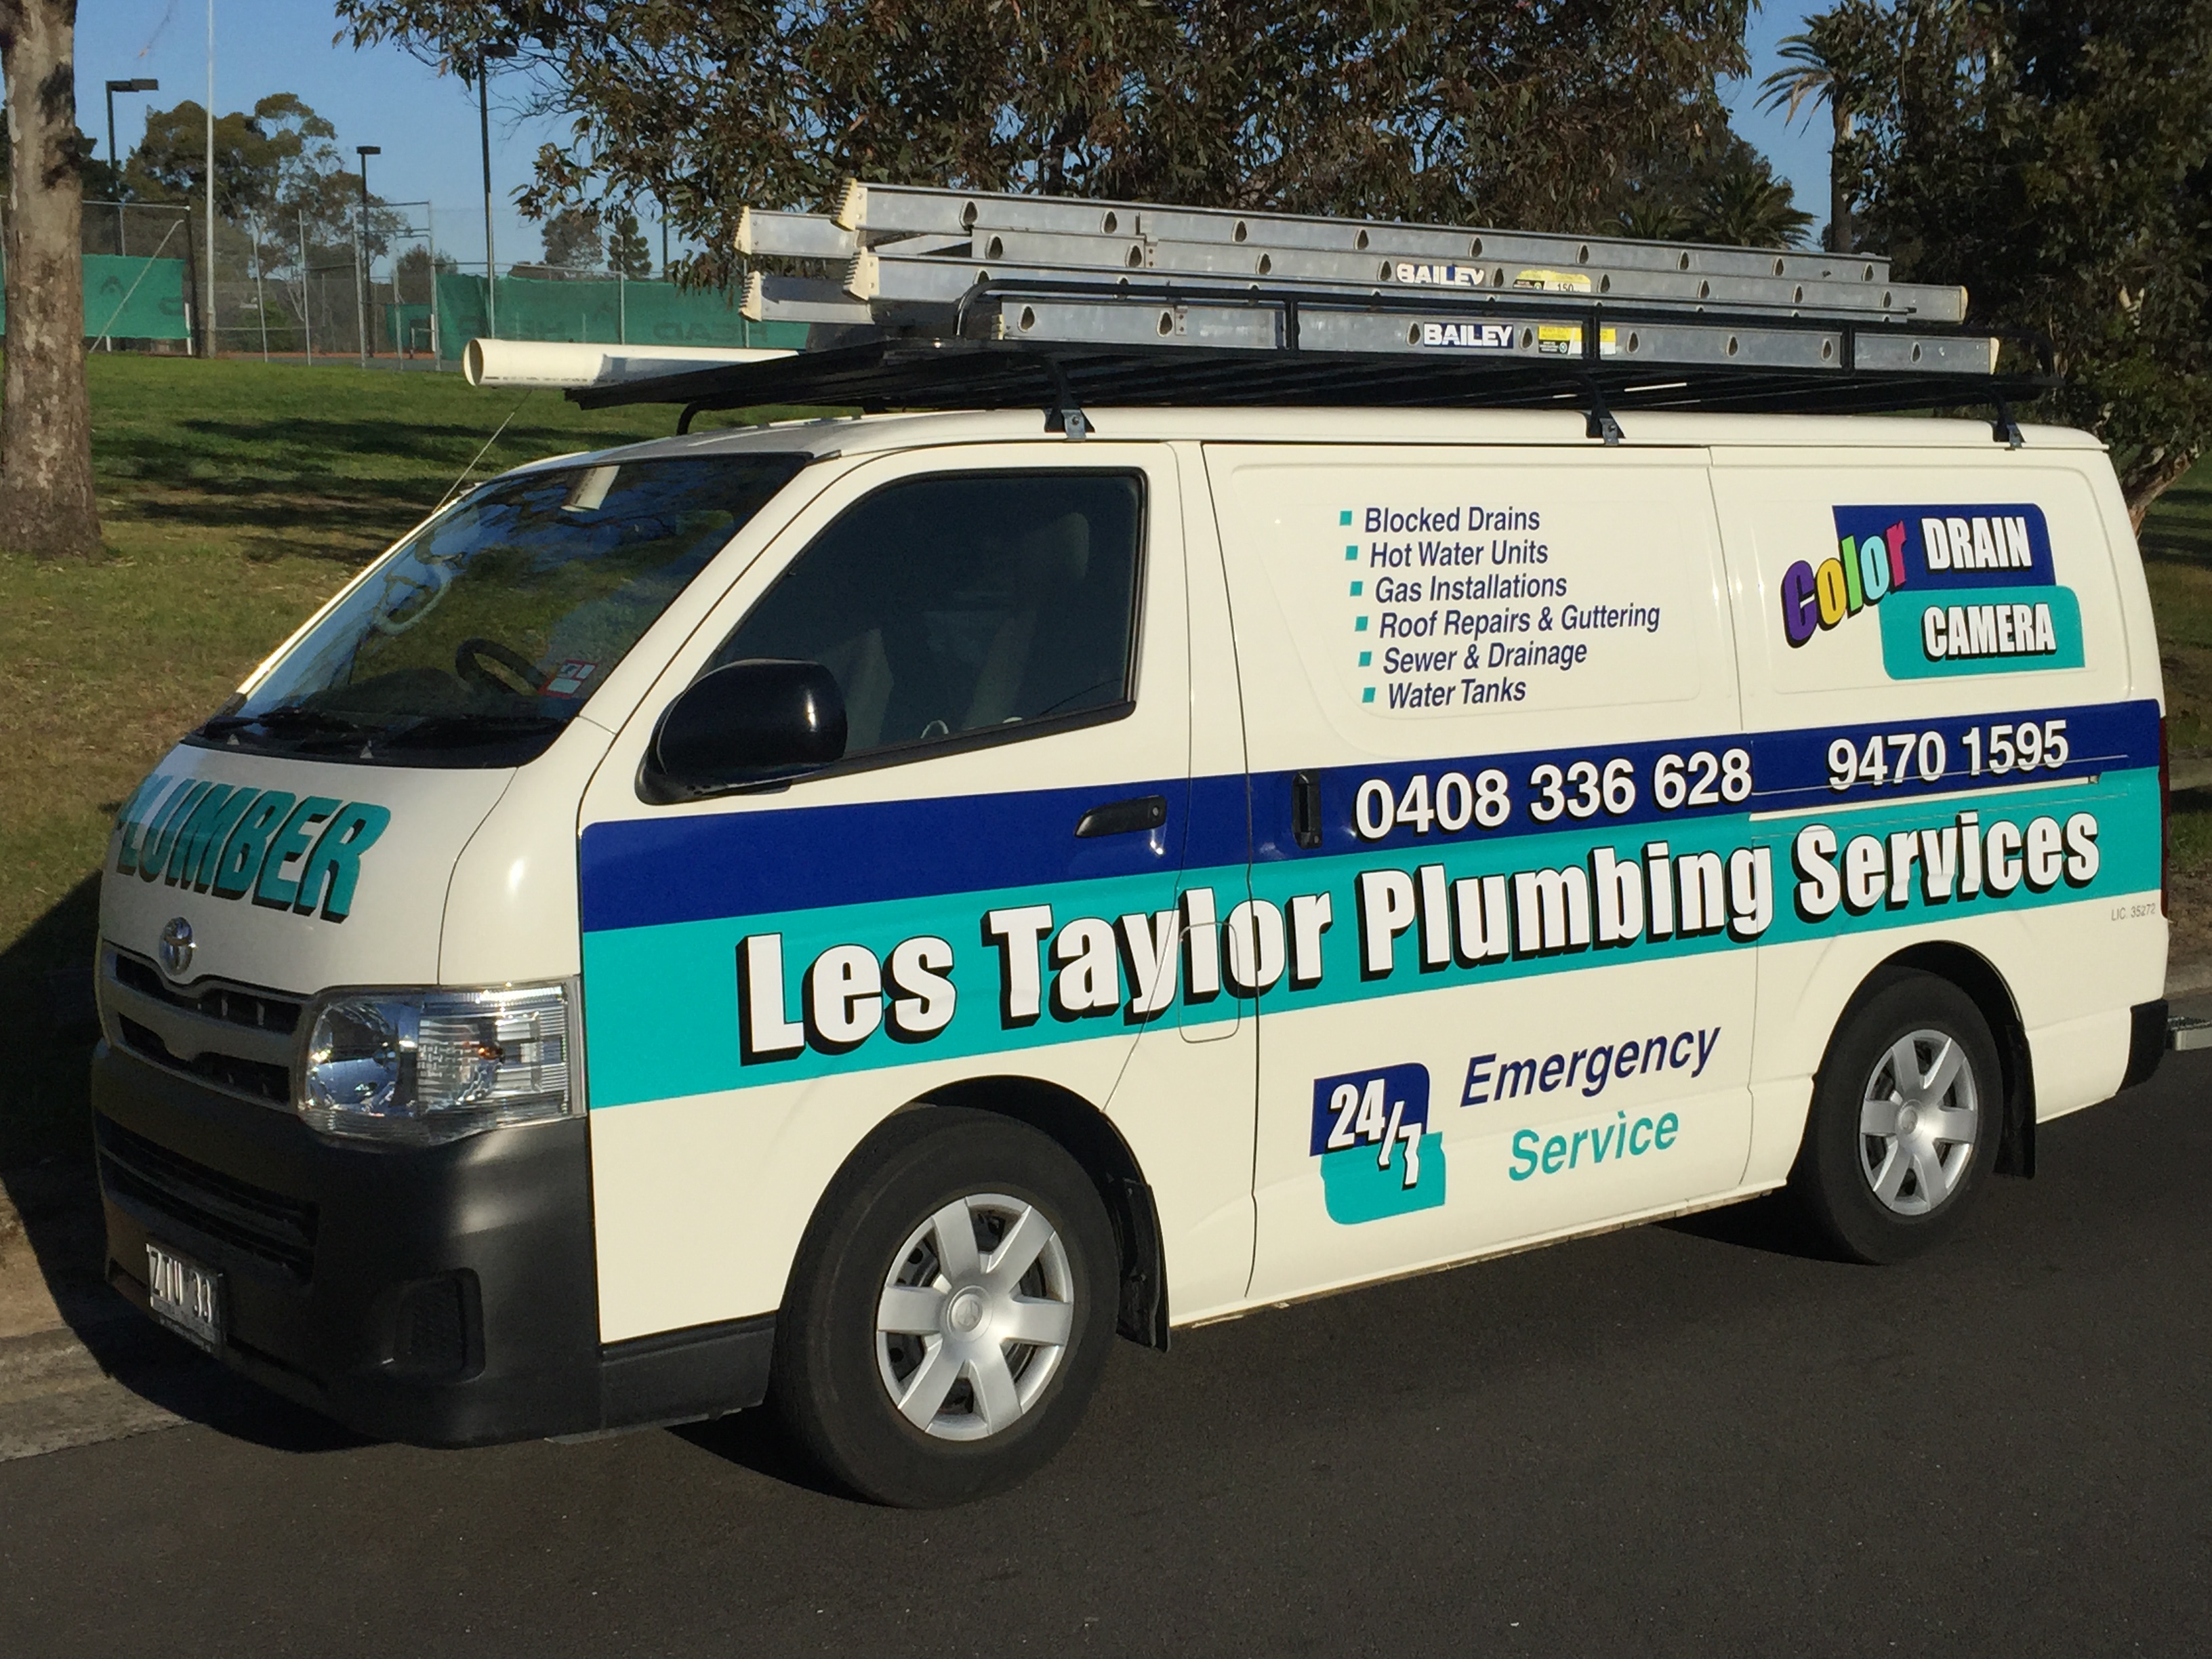 Les Taylor Plumbing Services...